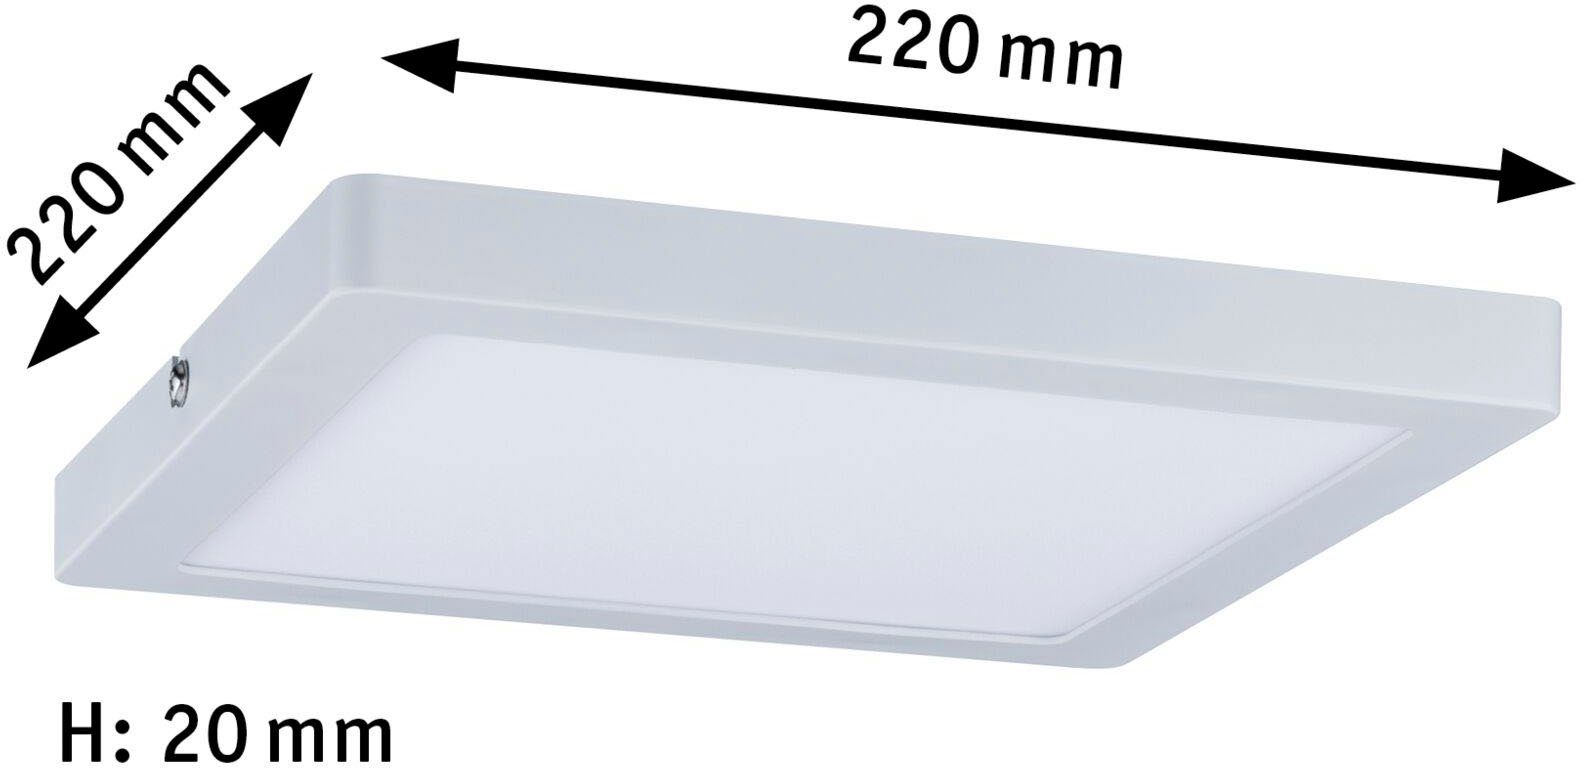 Paulmann LED Panel eckig Atria matt, LED matt Weiß integriert, 14W fest 220x220mm Neutralweiß, 4.000K 4.000K 220x220mm eckig 14W Weiß Atria